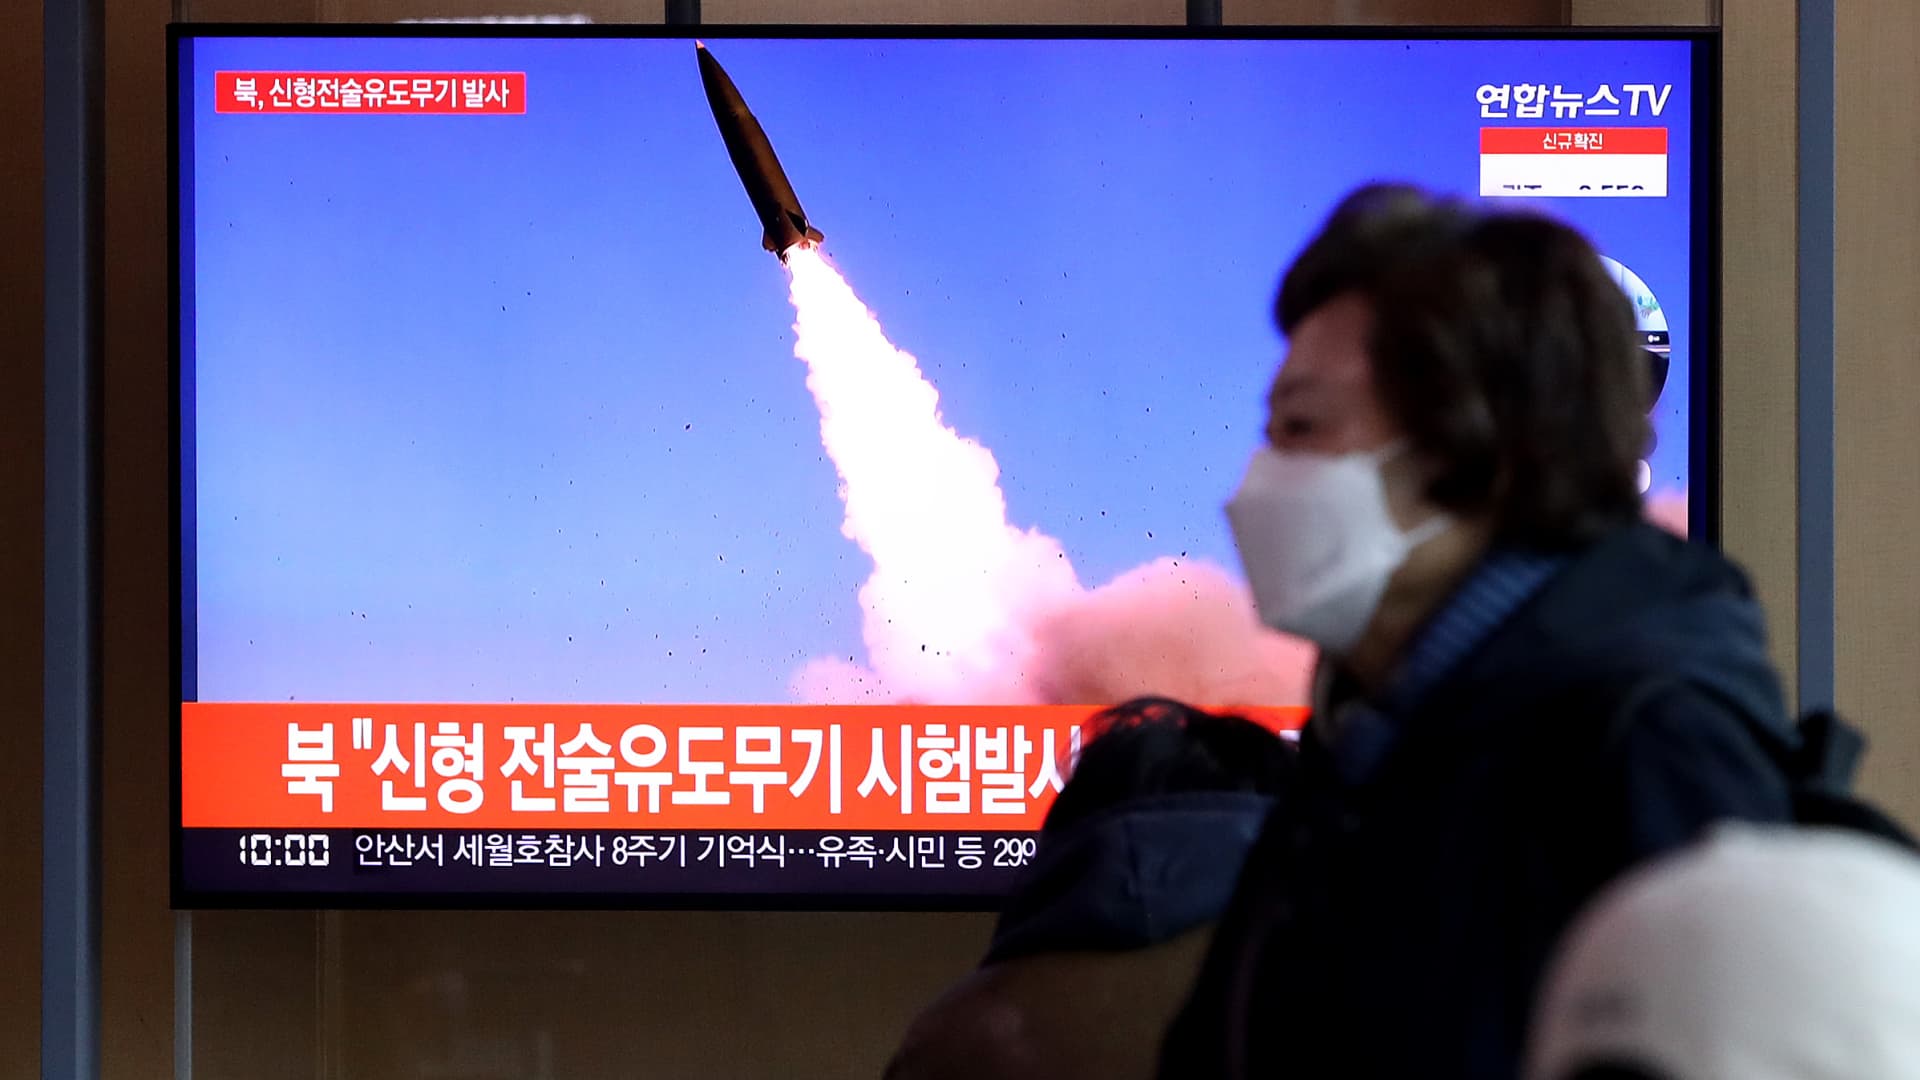 North Korea fires a ballistic missile into the Sea of Japan, South Korea says